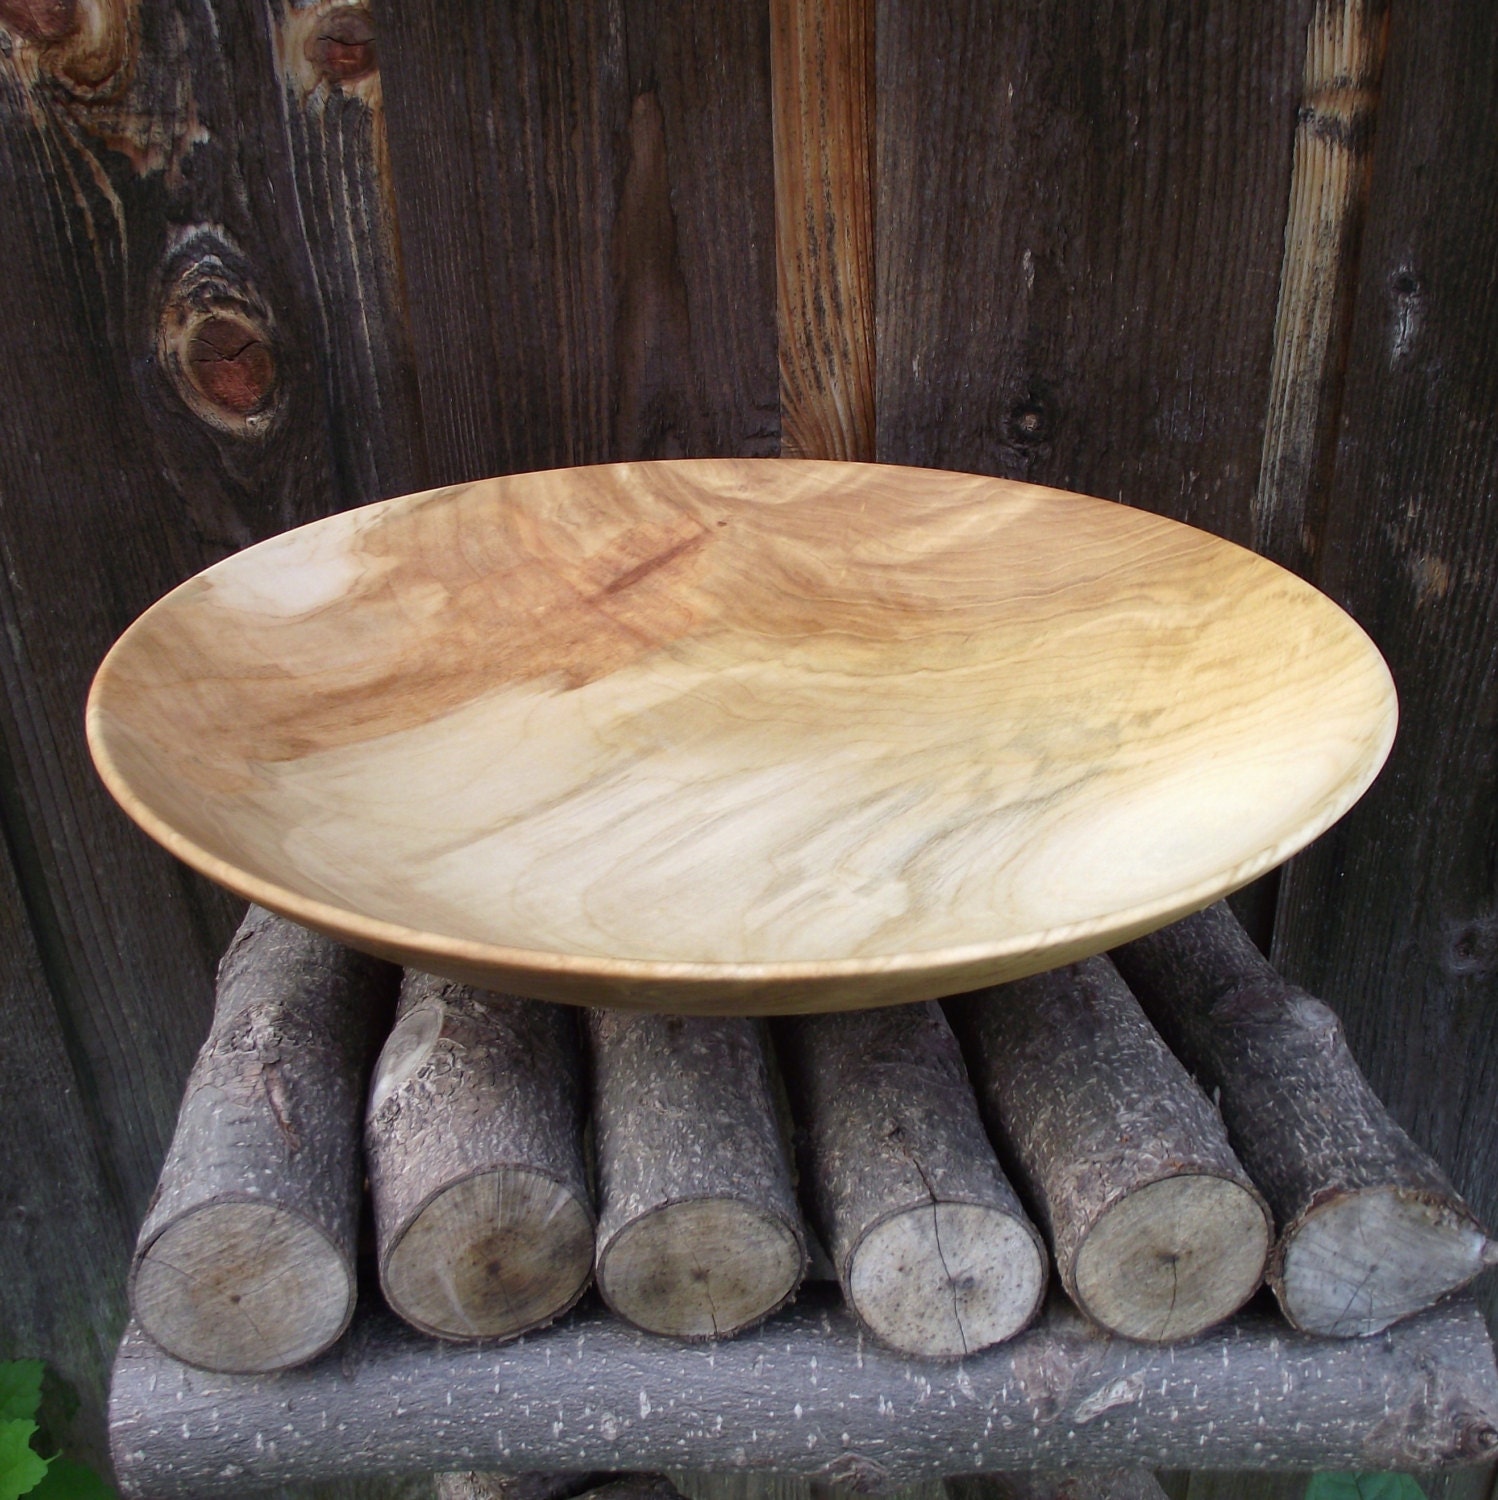 Woodworking magnolia wood Main Image